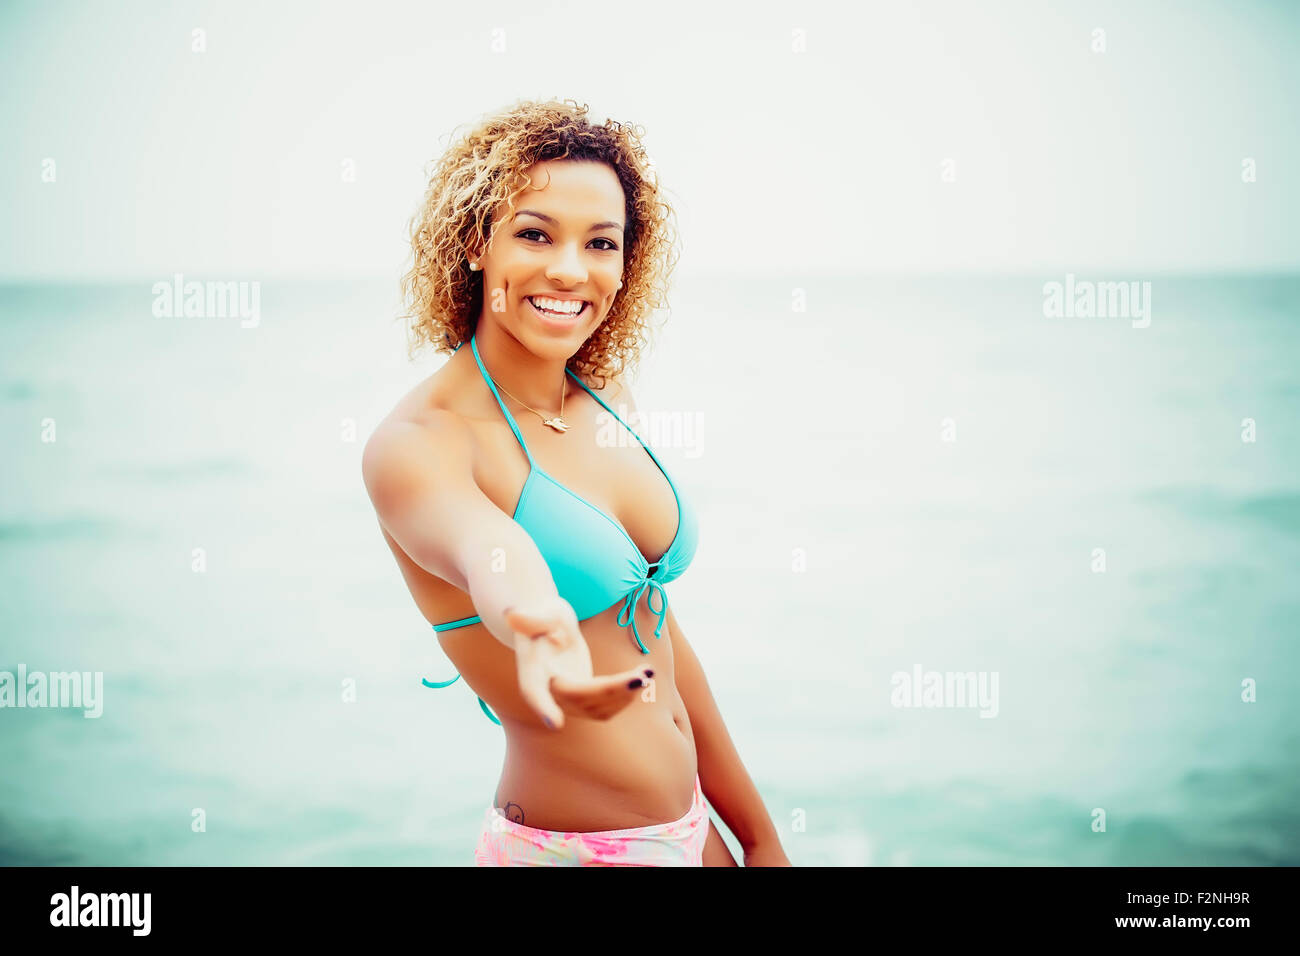 Blonde teenage girl bikini hi-res stock photography and images - Alamy